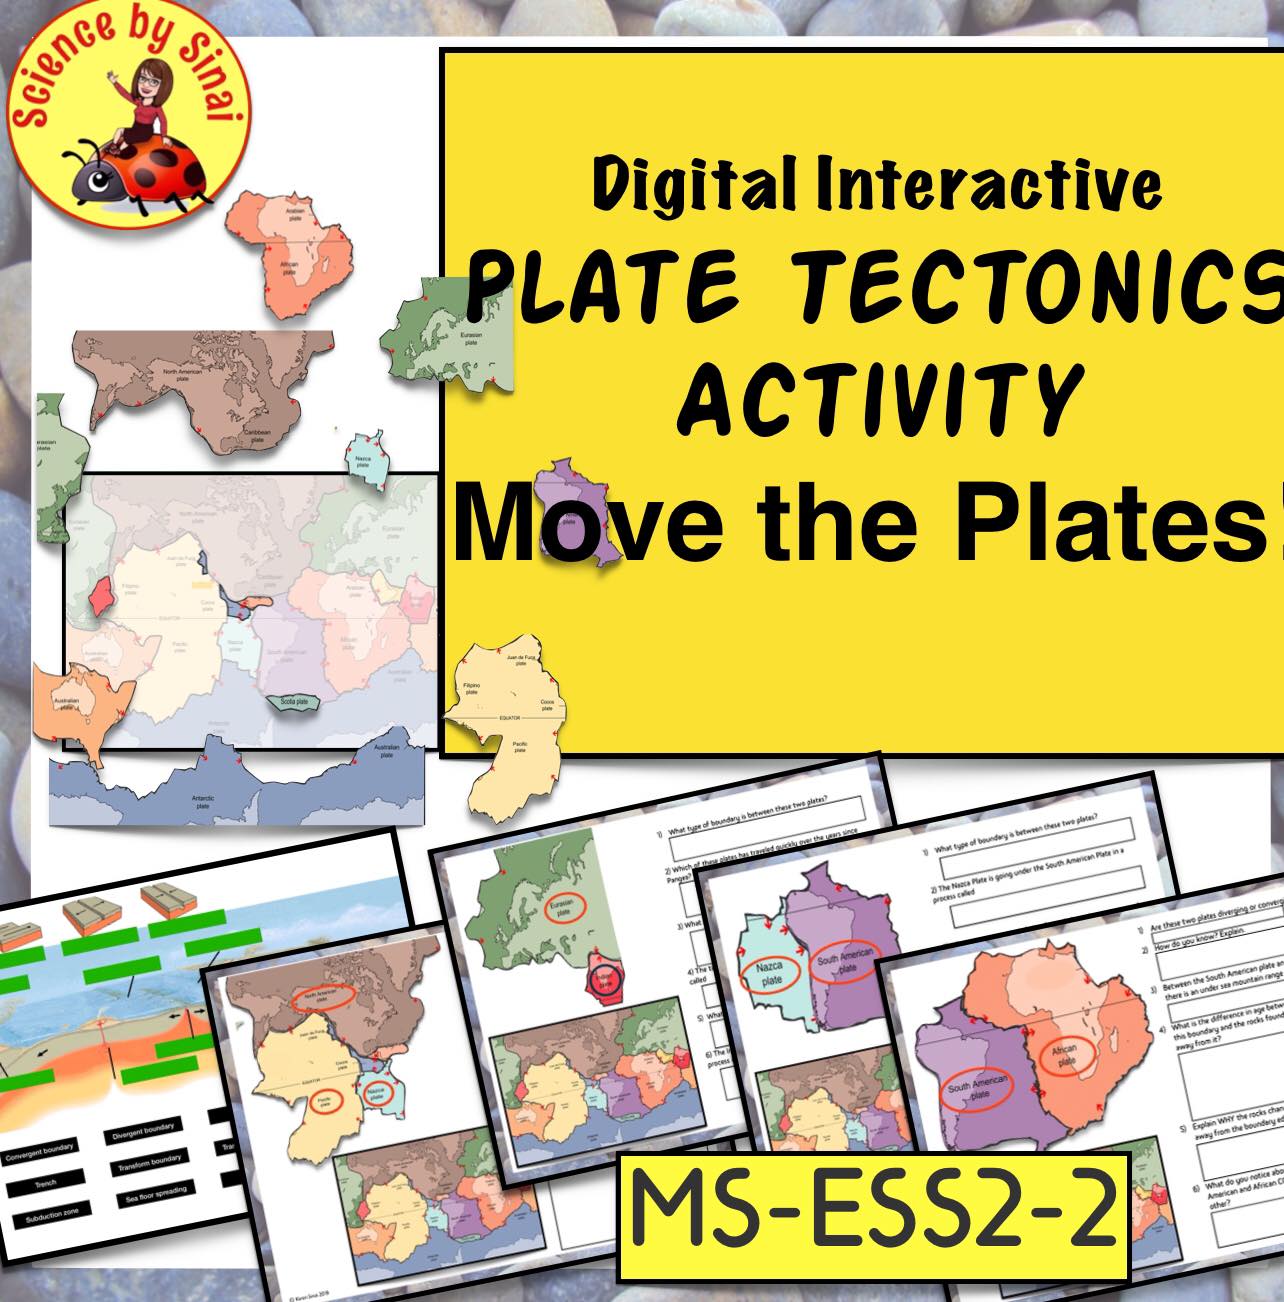 Digital Interactive - Plate Tectonics Activity: Move the Plates